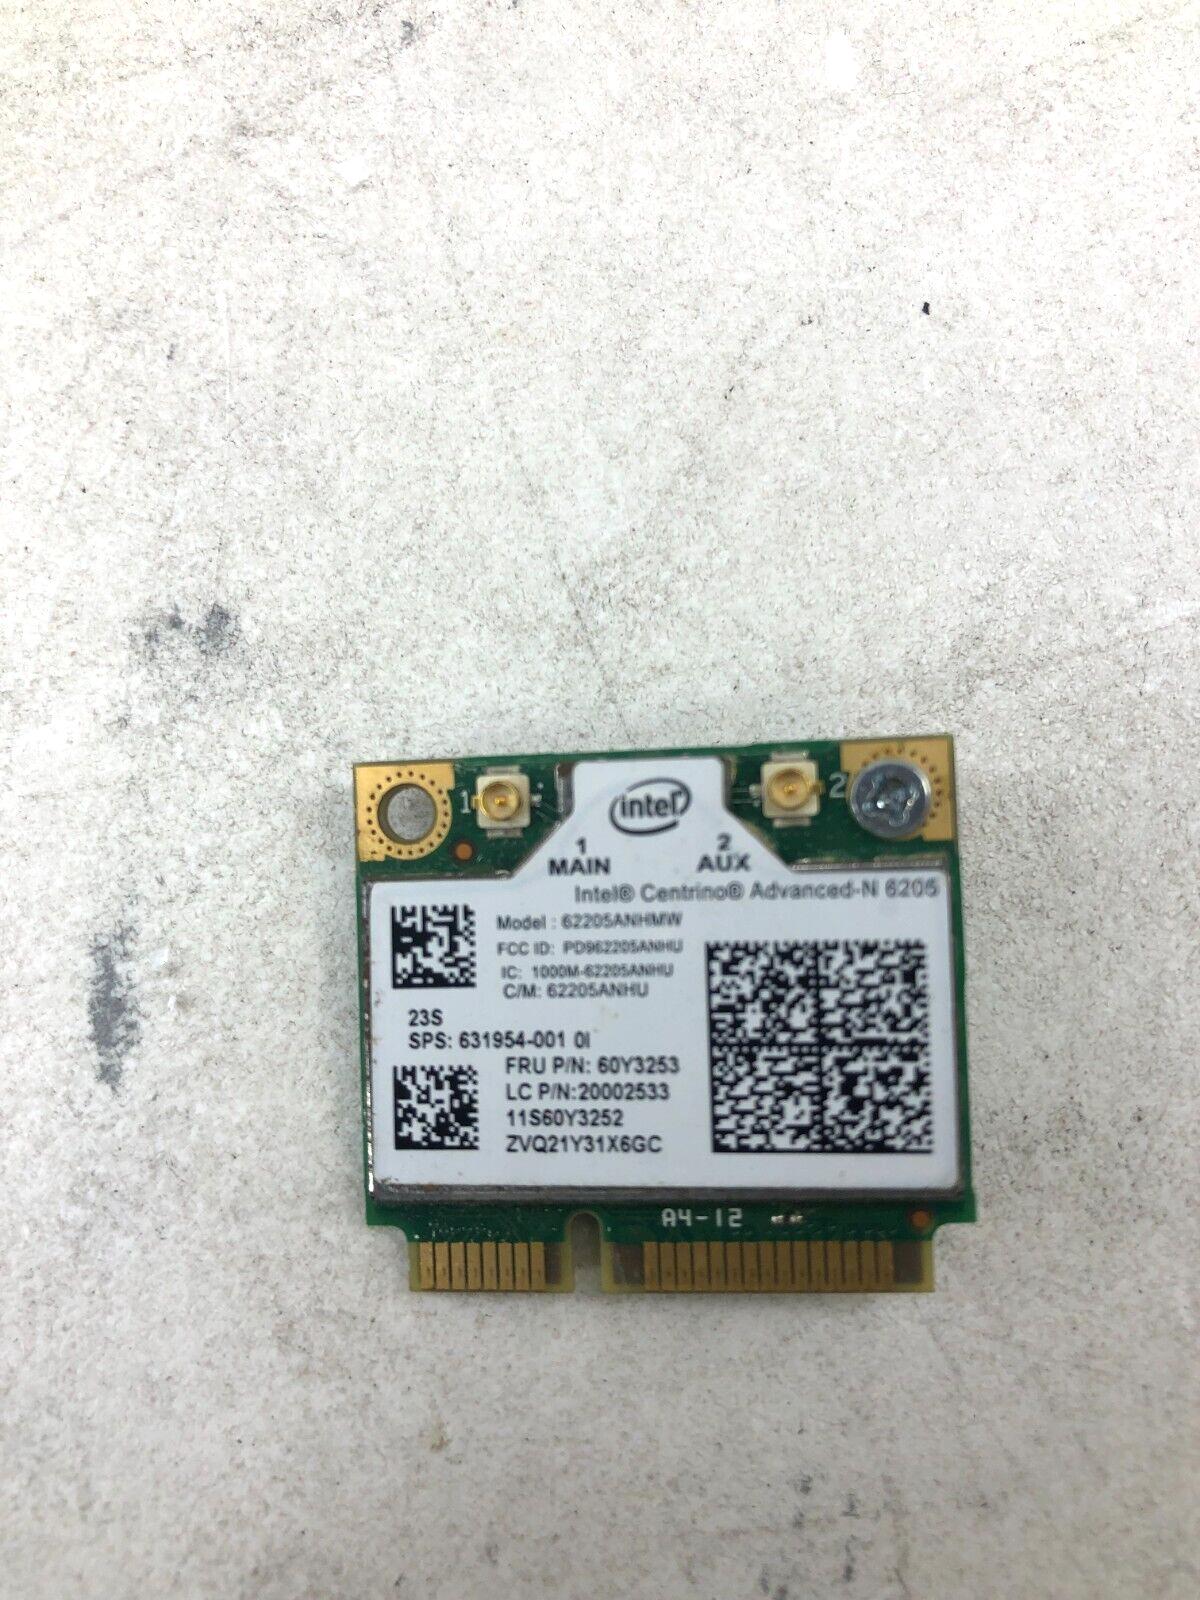 Lot of 6 Intel Centrino Advanced 6205 PCI-E WLAN WiFi Wireless Card  62205ANHMW